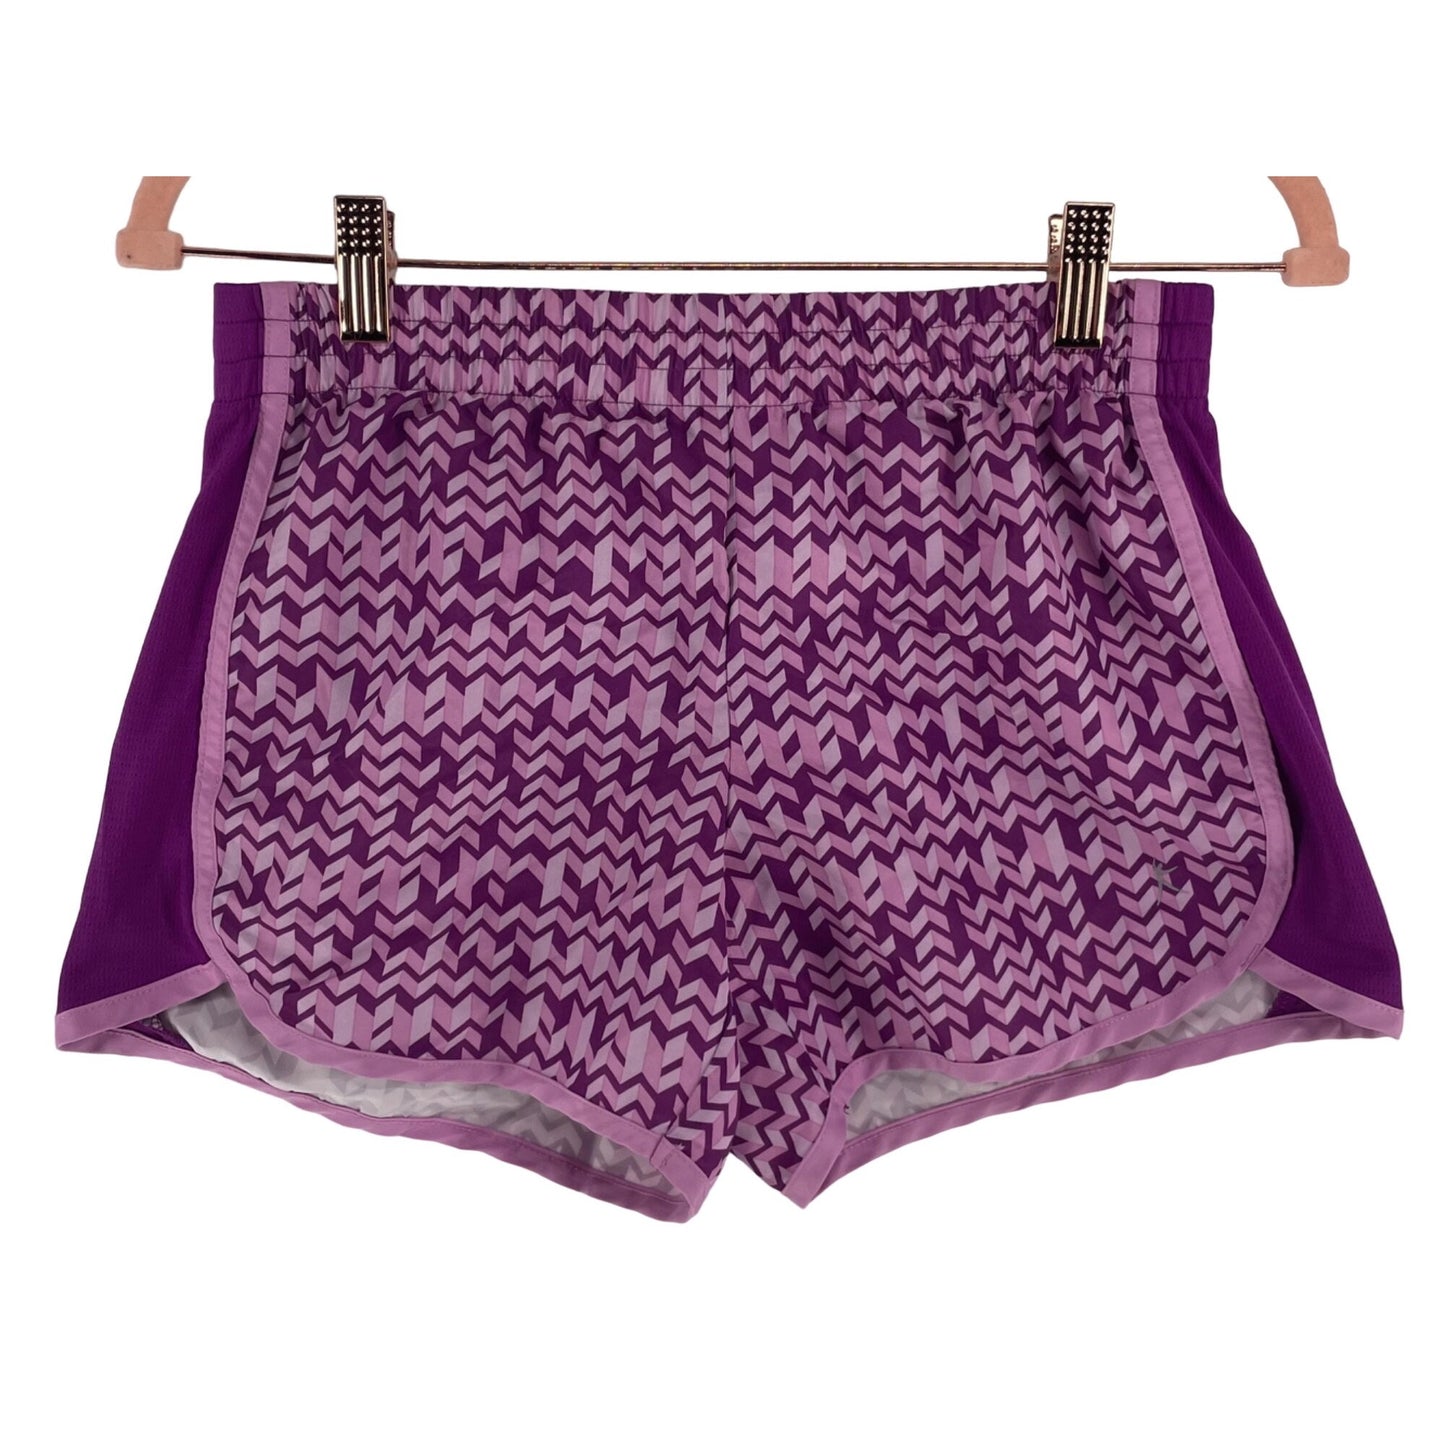 Danksin Now Women's Size XS Two-Tone Purple Chevron Jogger's Exercise Shorts